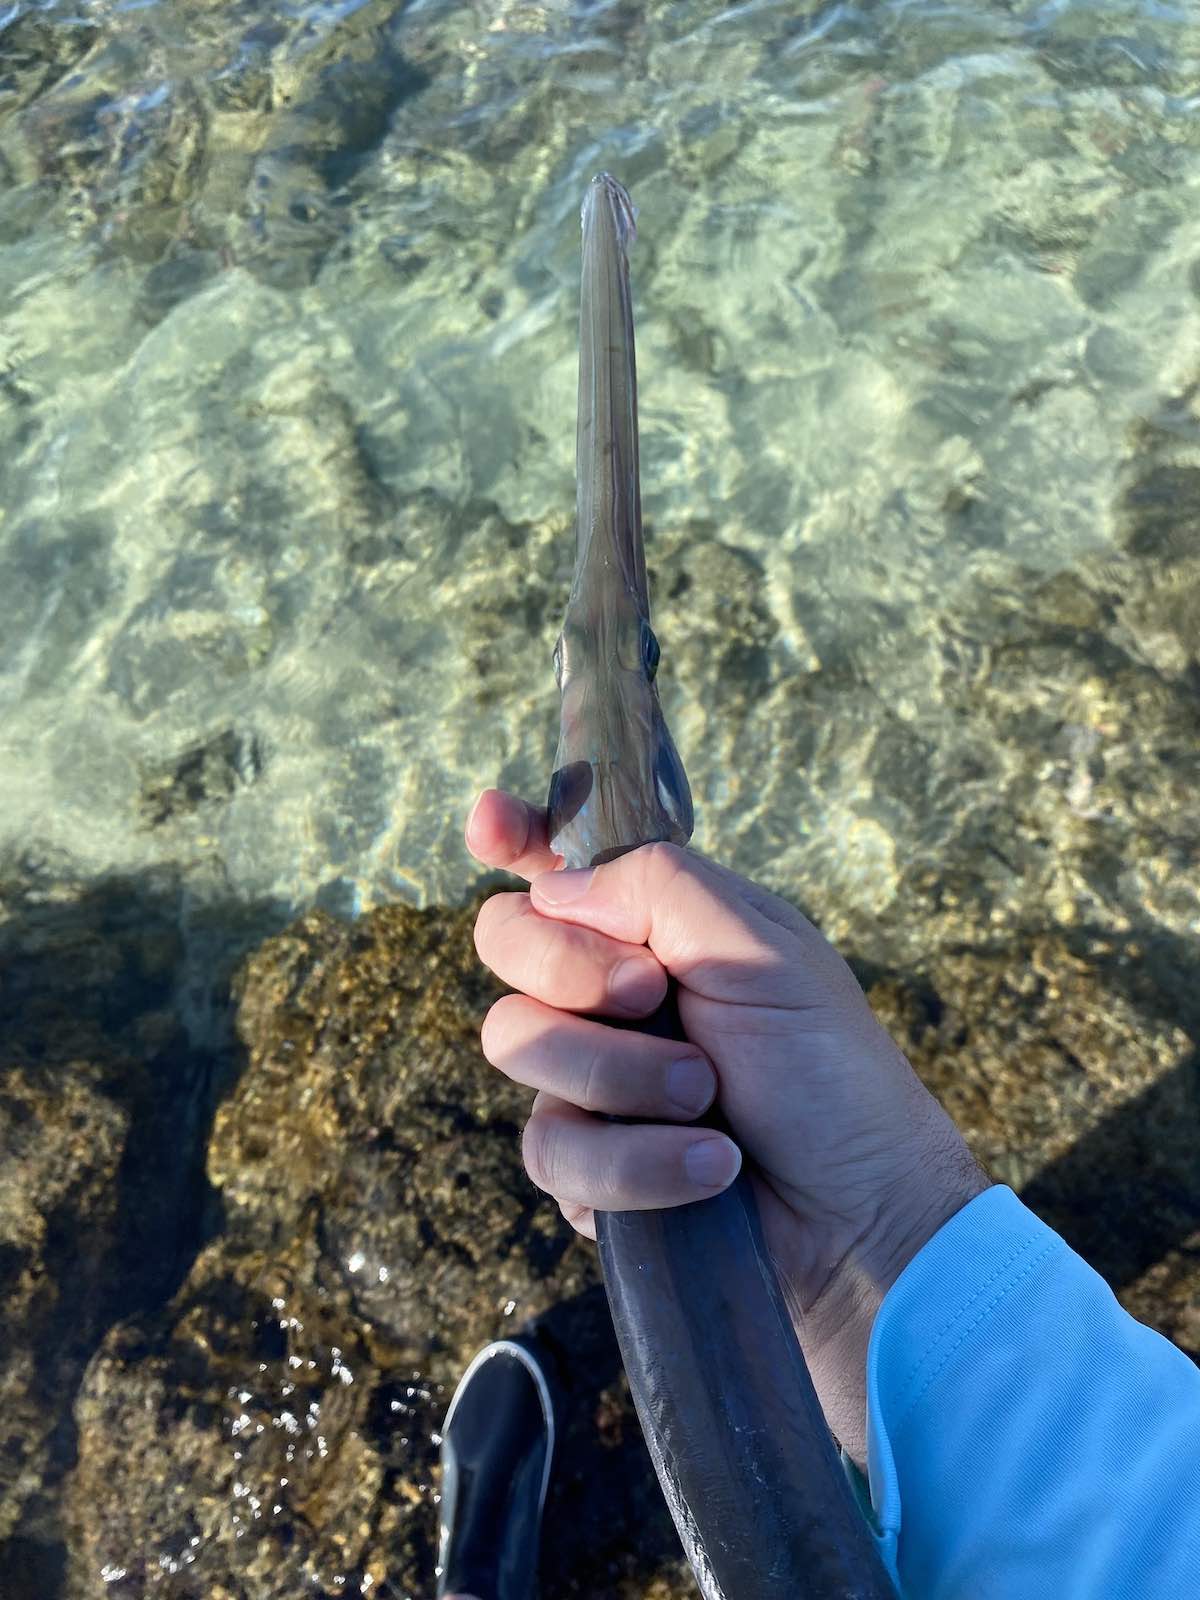 Cornetfish caught while fishing on the big island of Hawaii